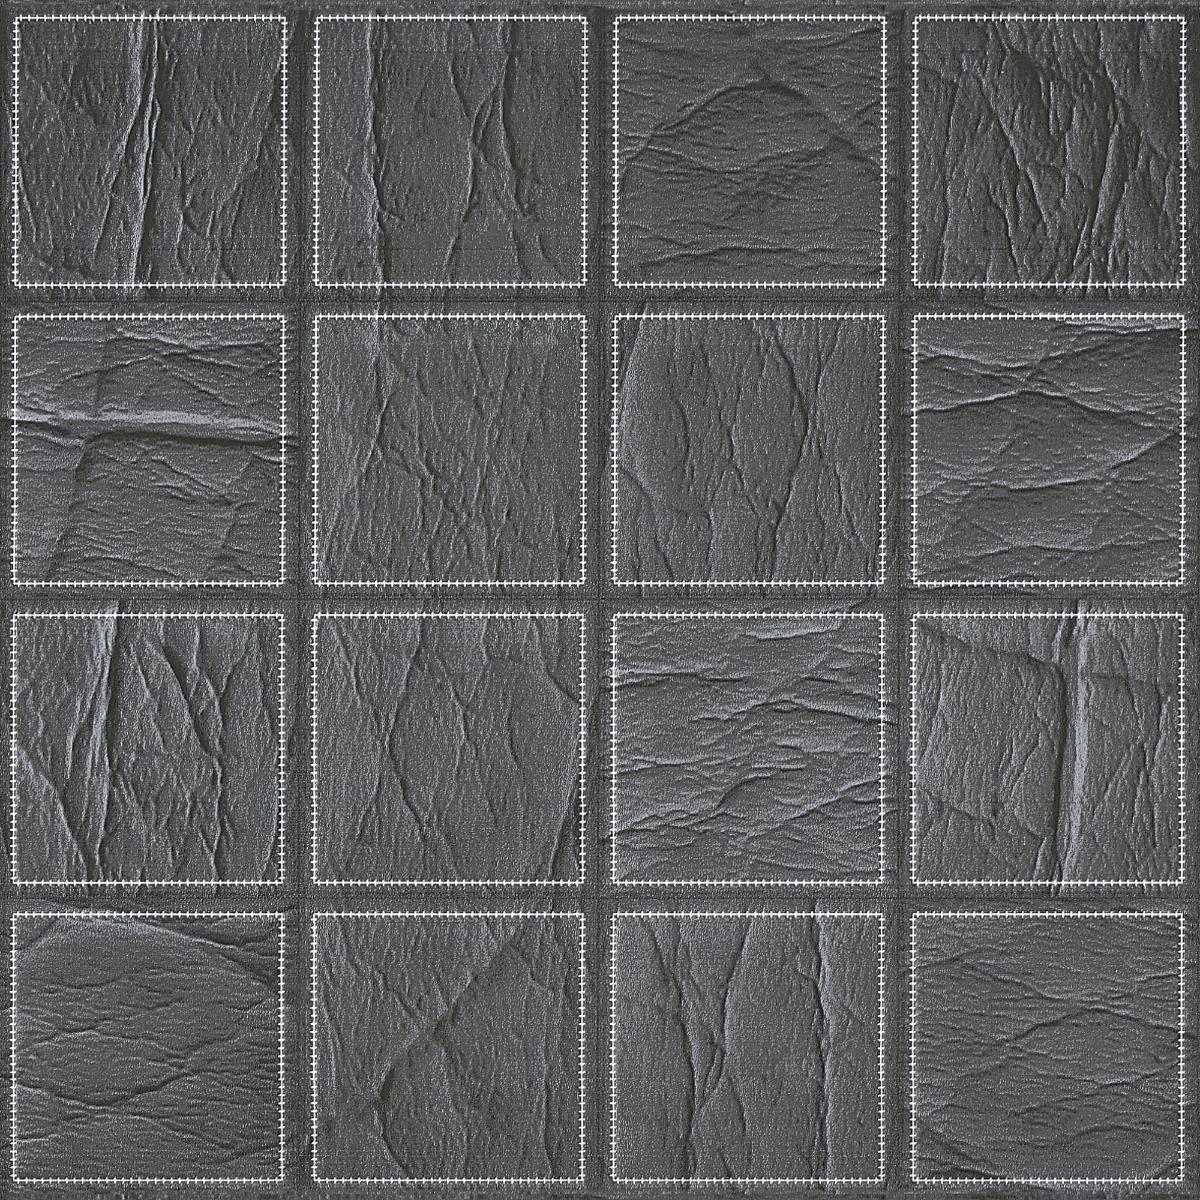 Texture Tiles for Bathroom Tiles, Kitchen Tiles, Balcony Tiles